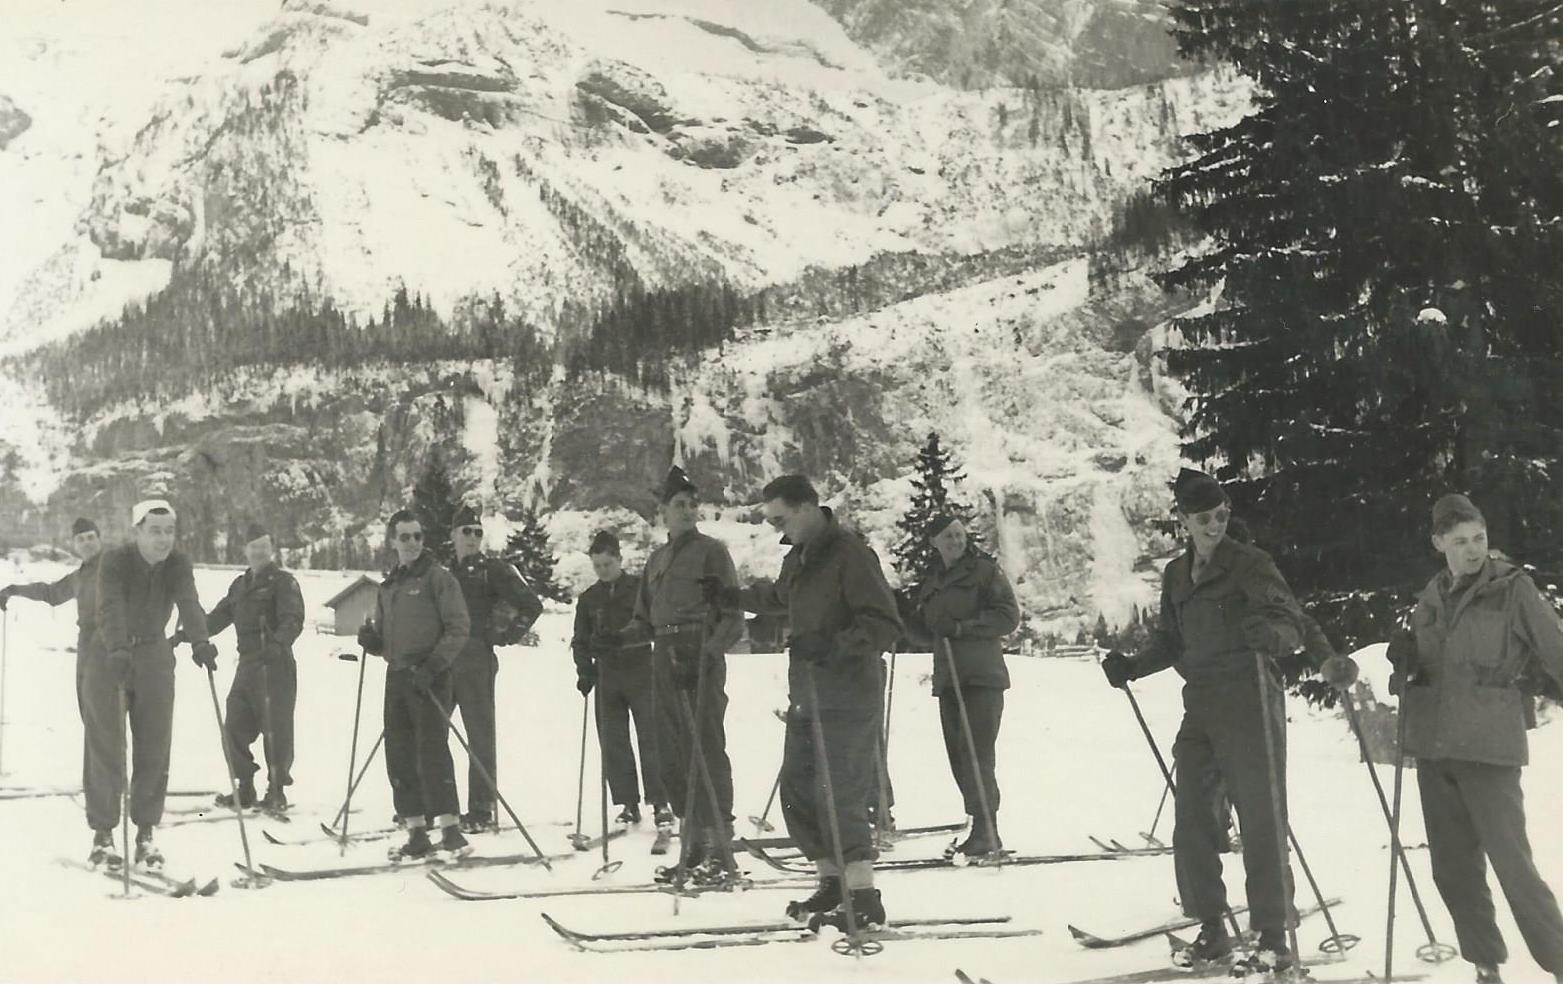 Skiing lessons (James McNitt third from left)